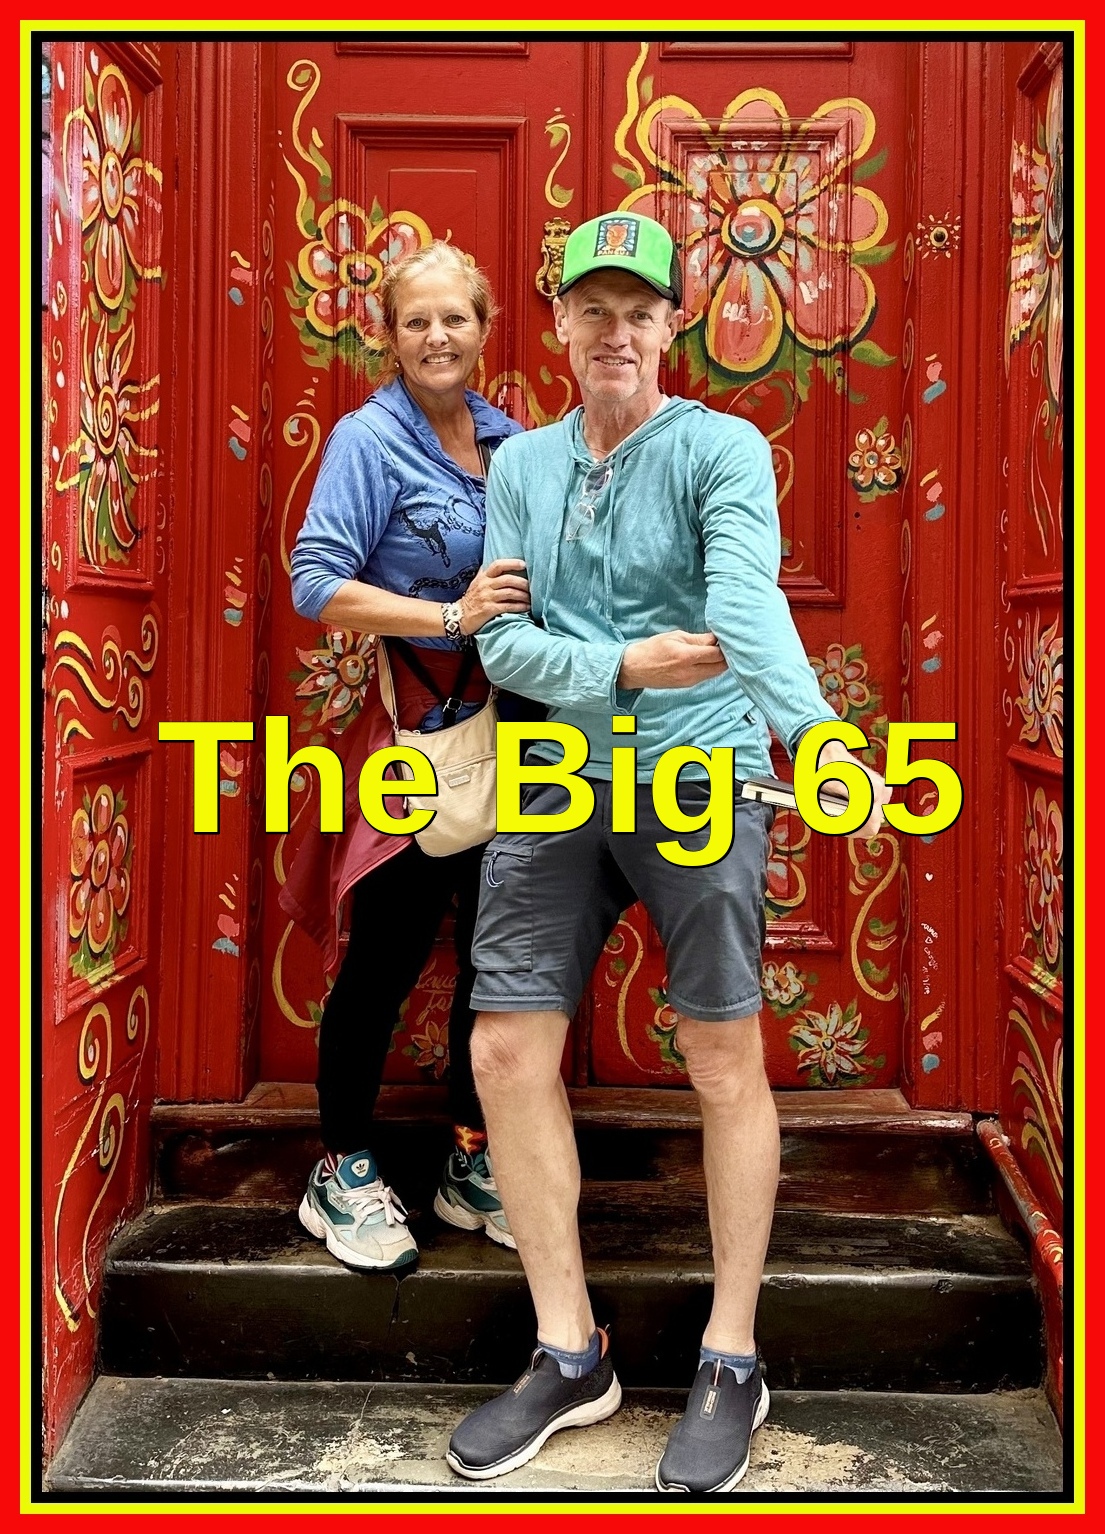 The Medicare insurance broker Karl Bruns-Kyler standing beside his wife Quantz in front of a bright red door.